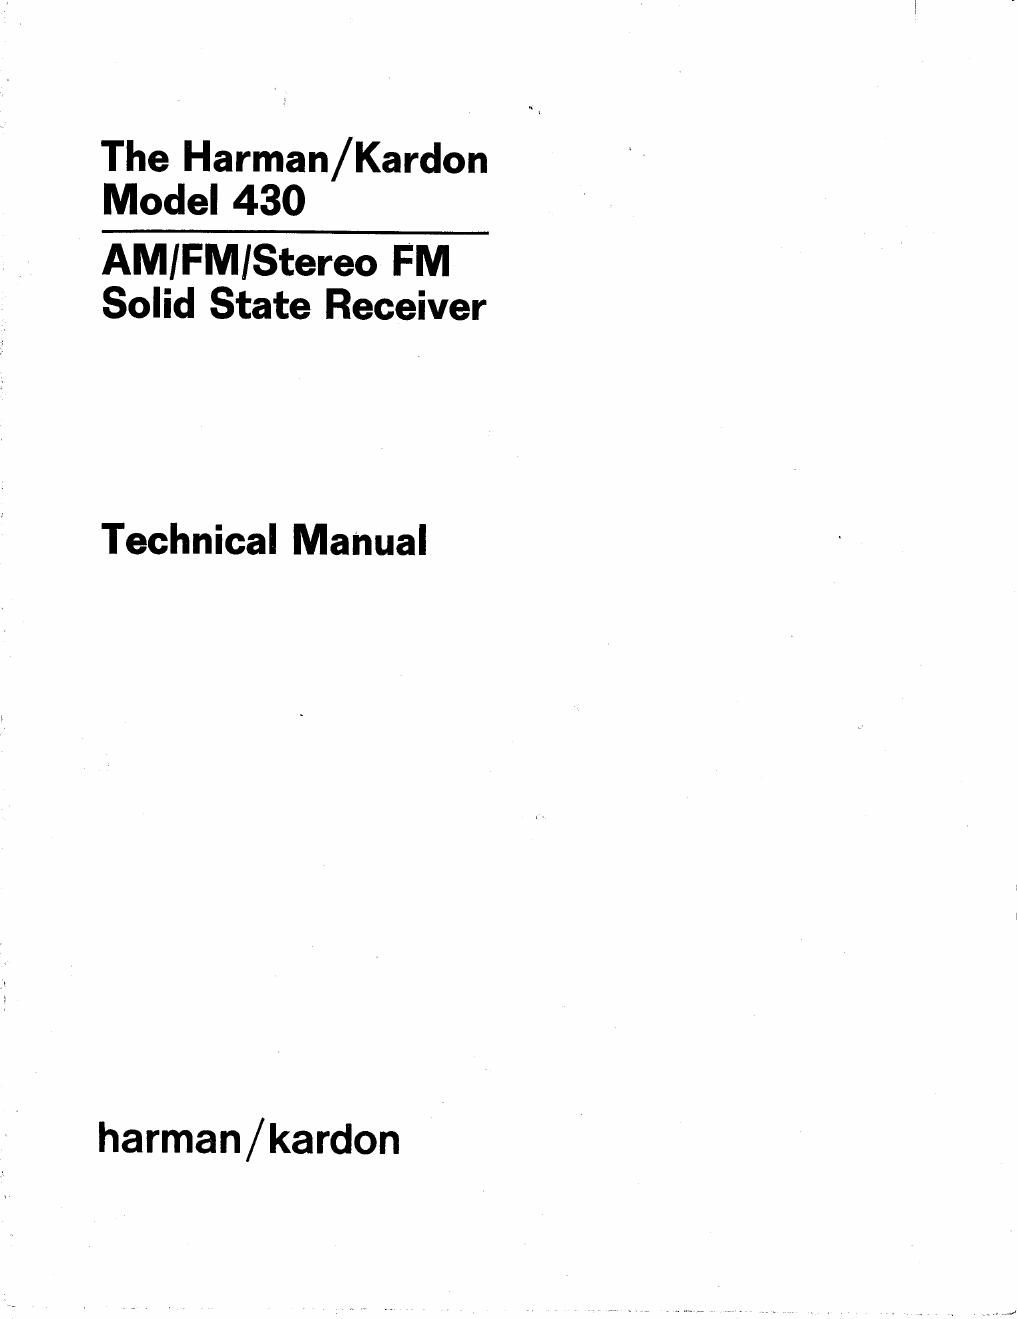 harman kardon 430 service manual